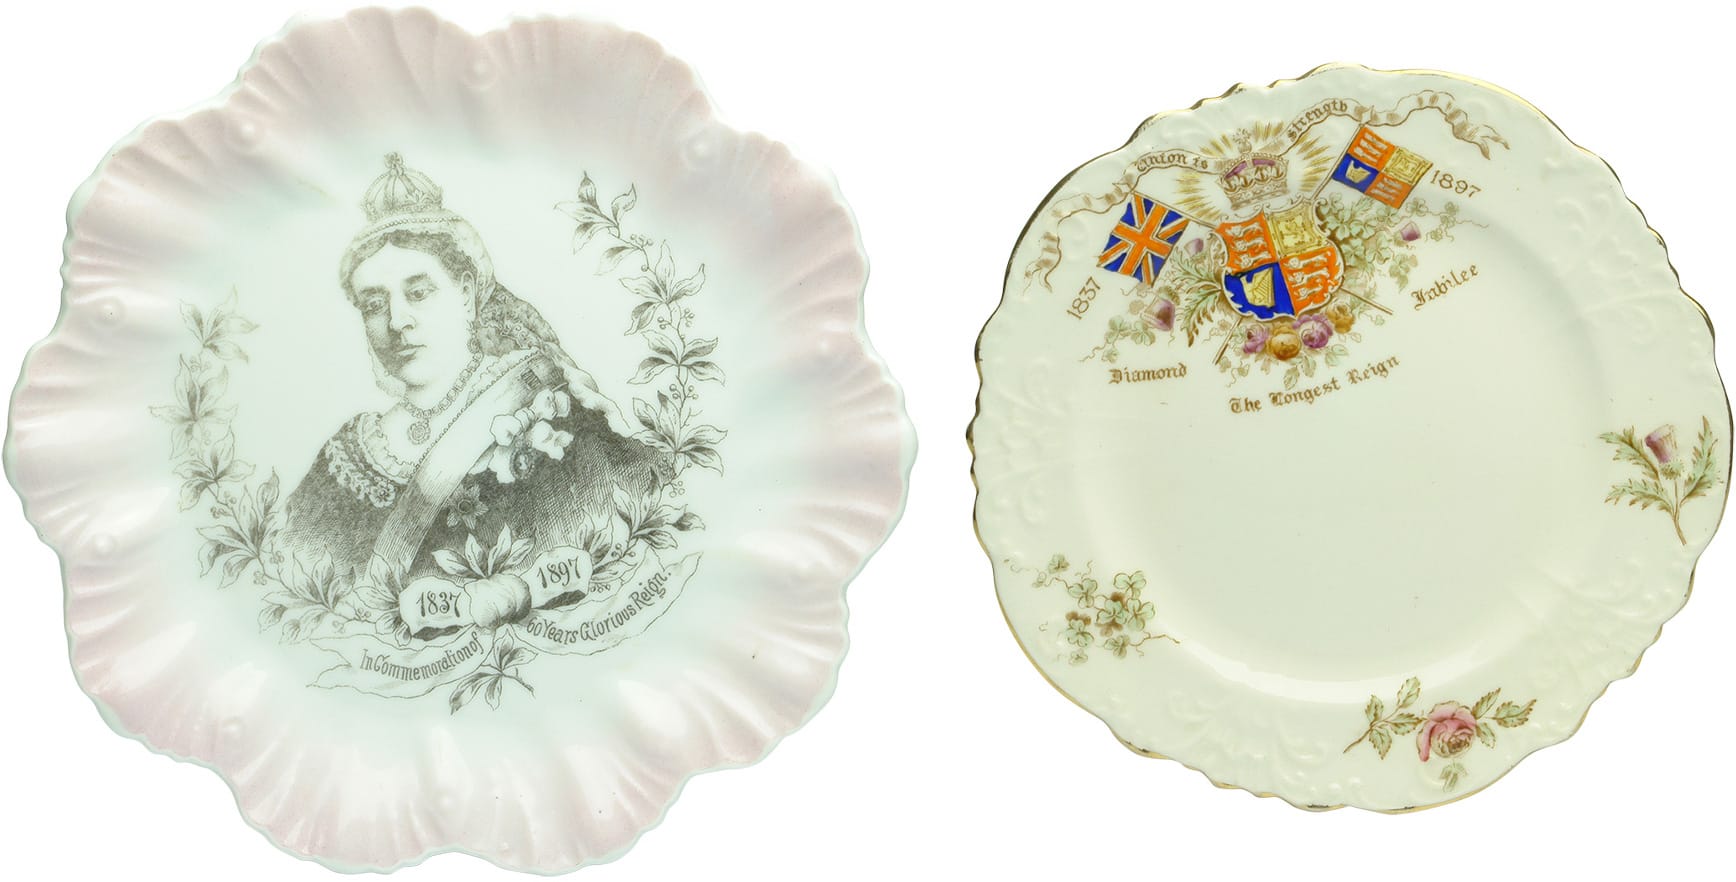 Queen Victoria Commemorative Plates